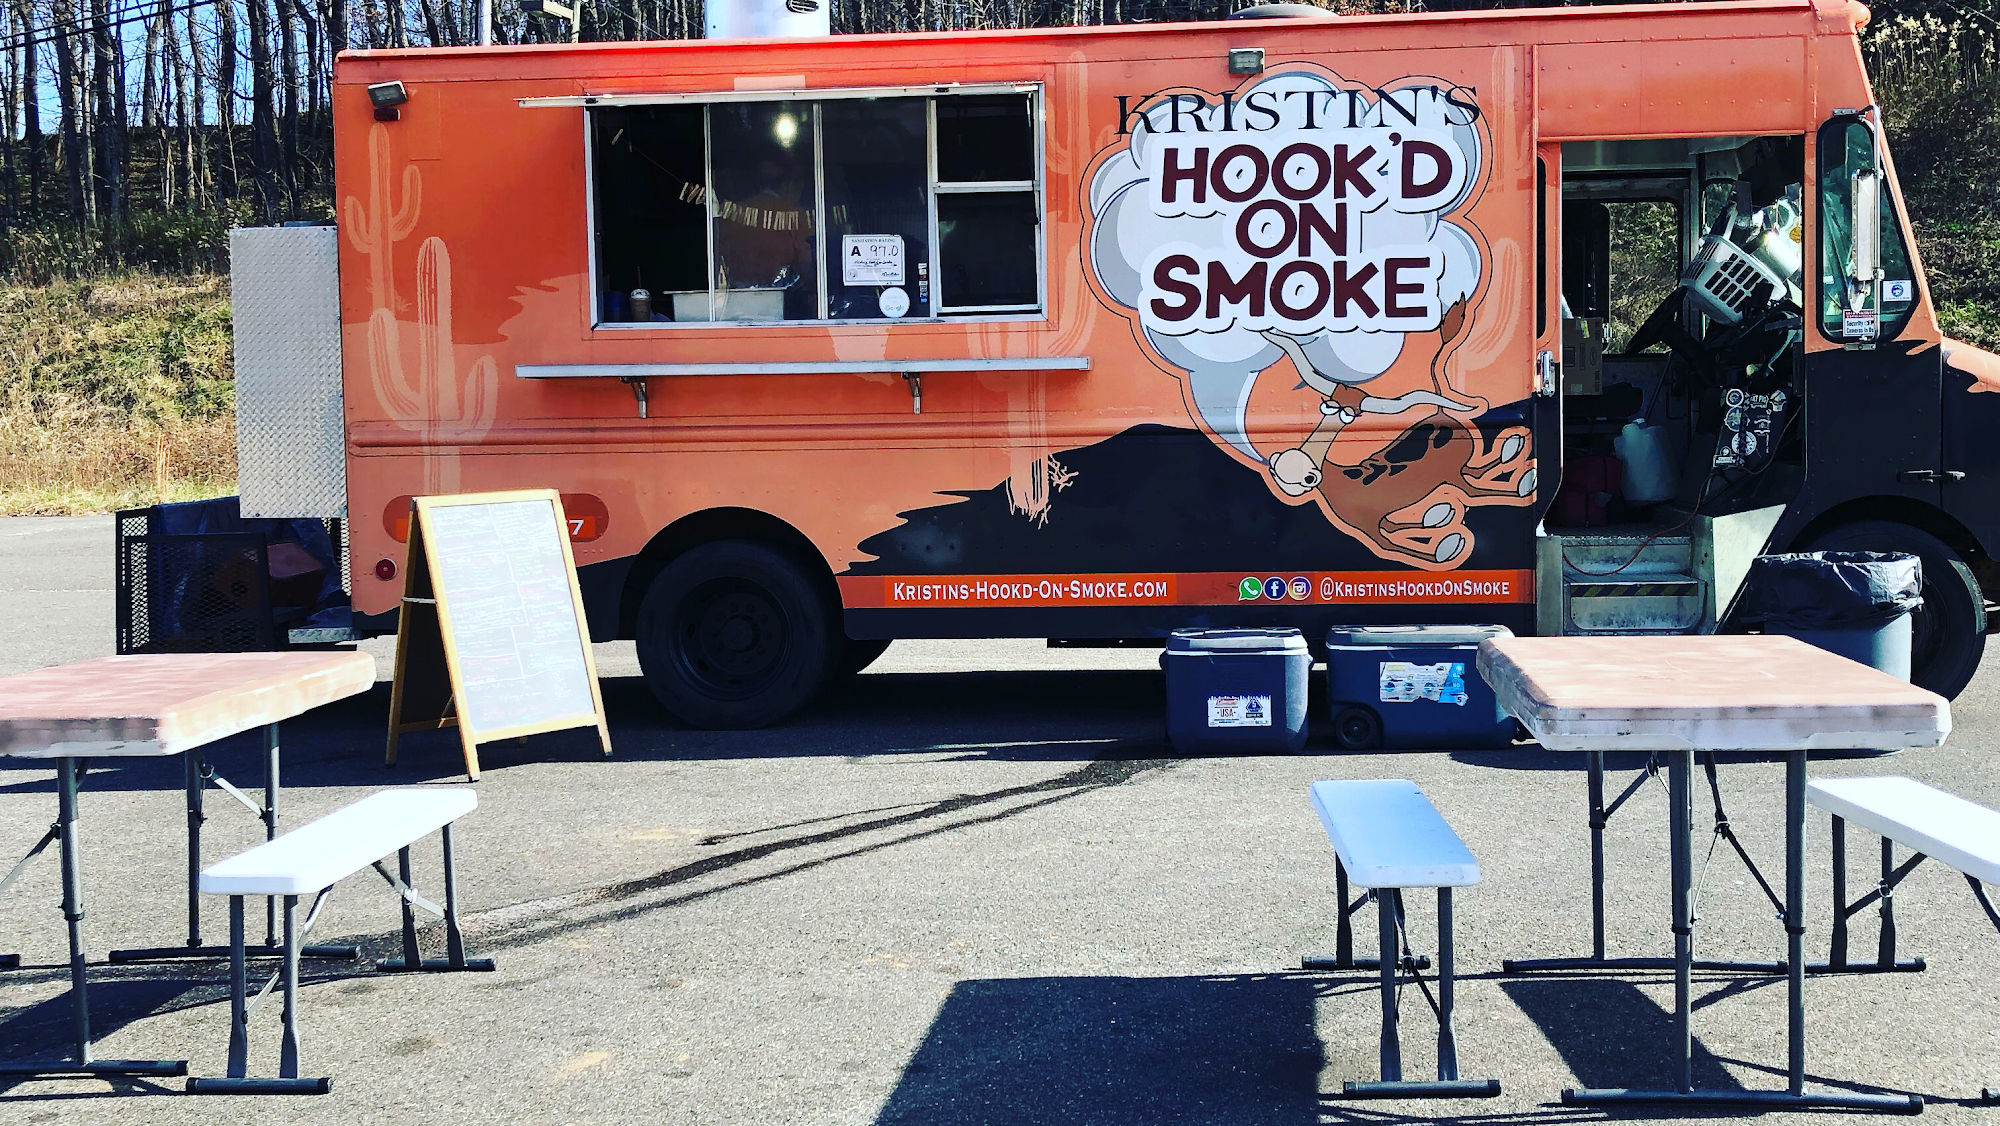 Kristin’s Hook’d On Smoke (food truck)